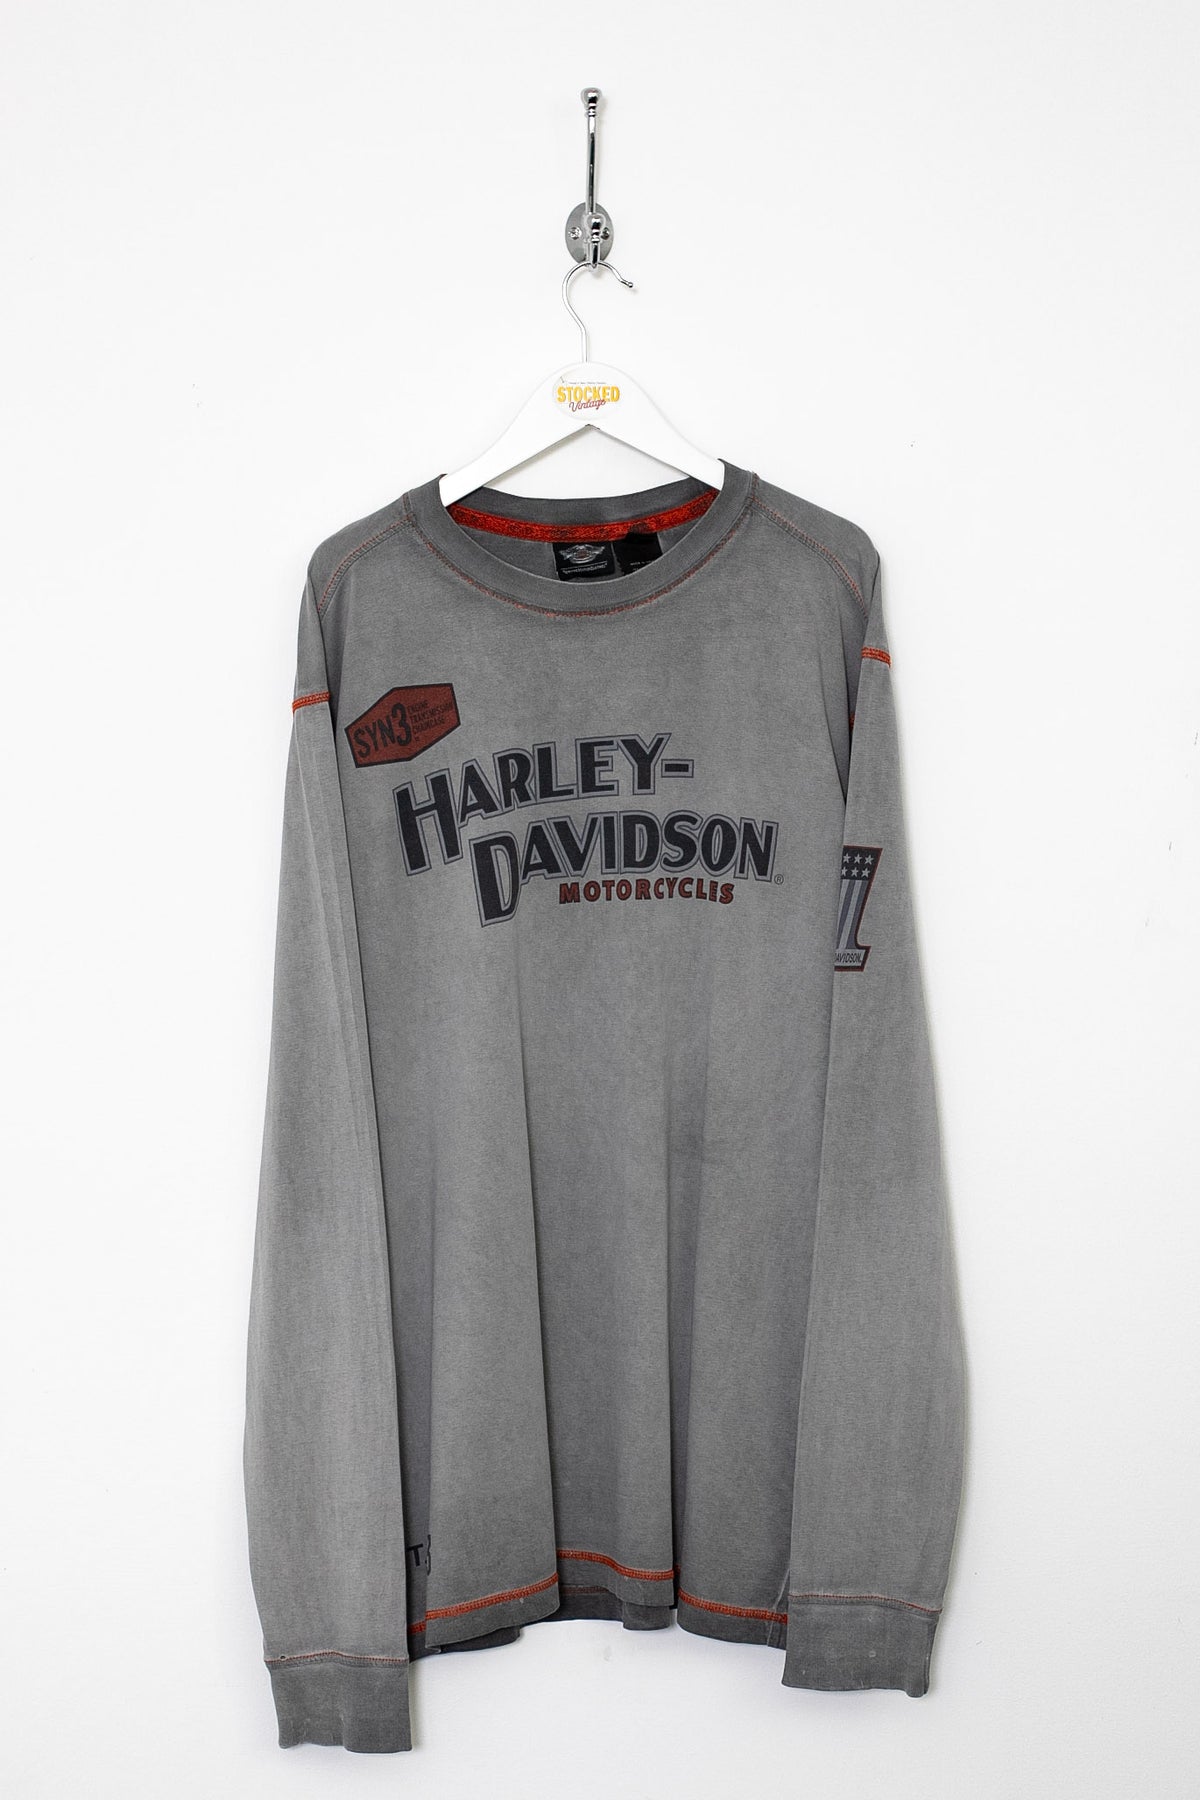 00s Harley Davidson Long Sleeve Tee (L)